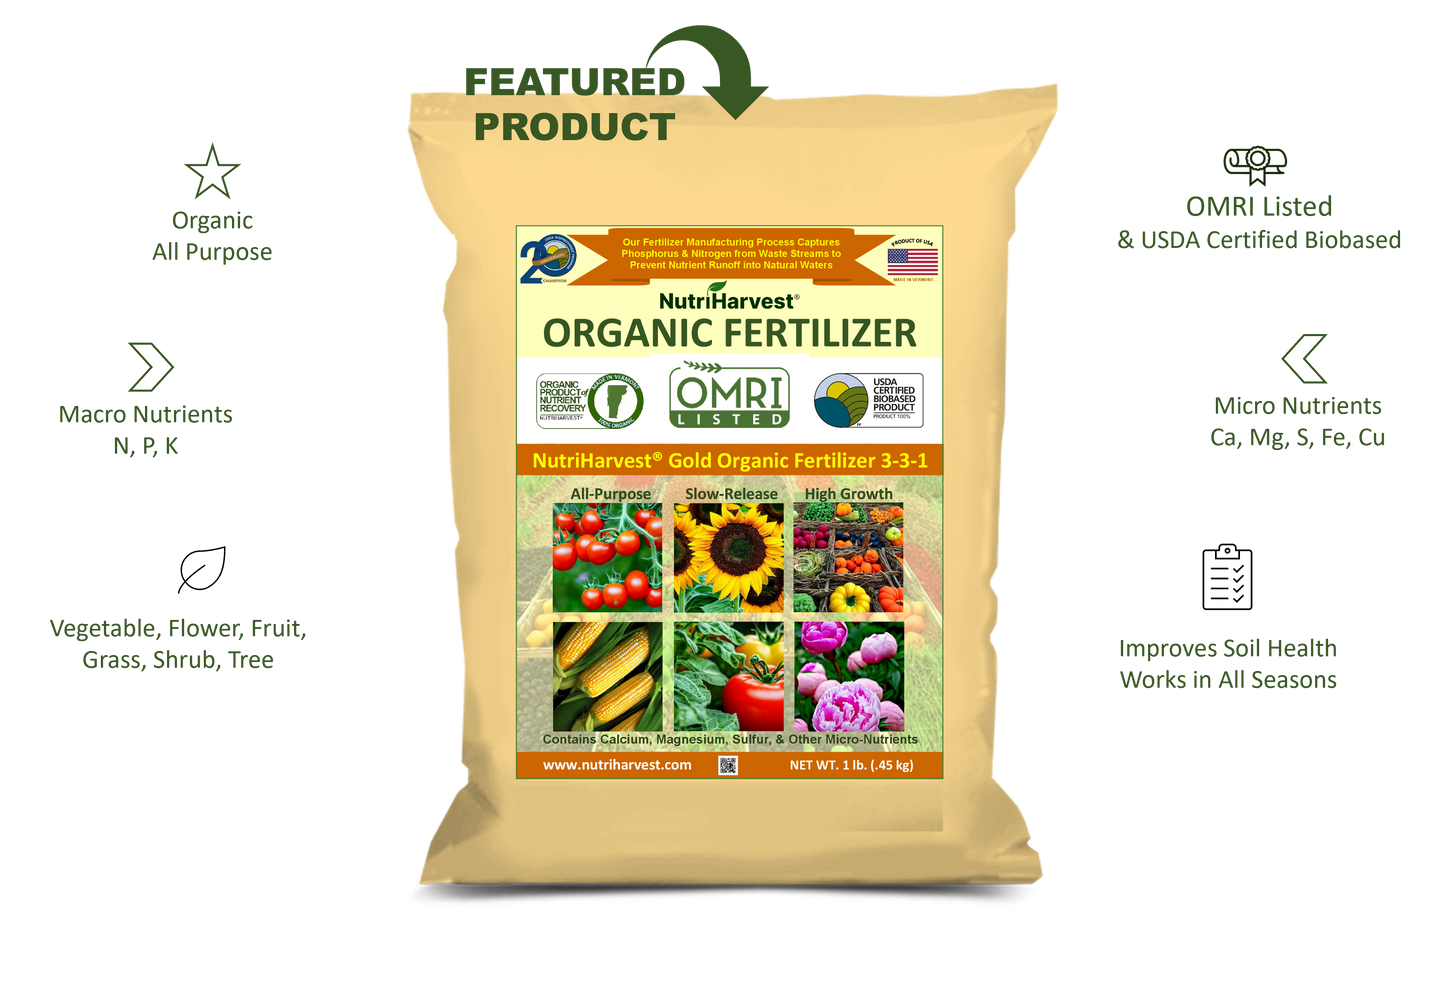 NutriHarvest® Gold Super Organic Fertilizer 3-3-1, OMRI Listed, 100% USDA-certified Biobased, in Resealable Bag